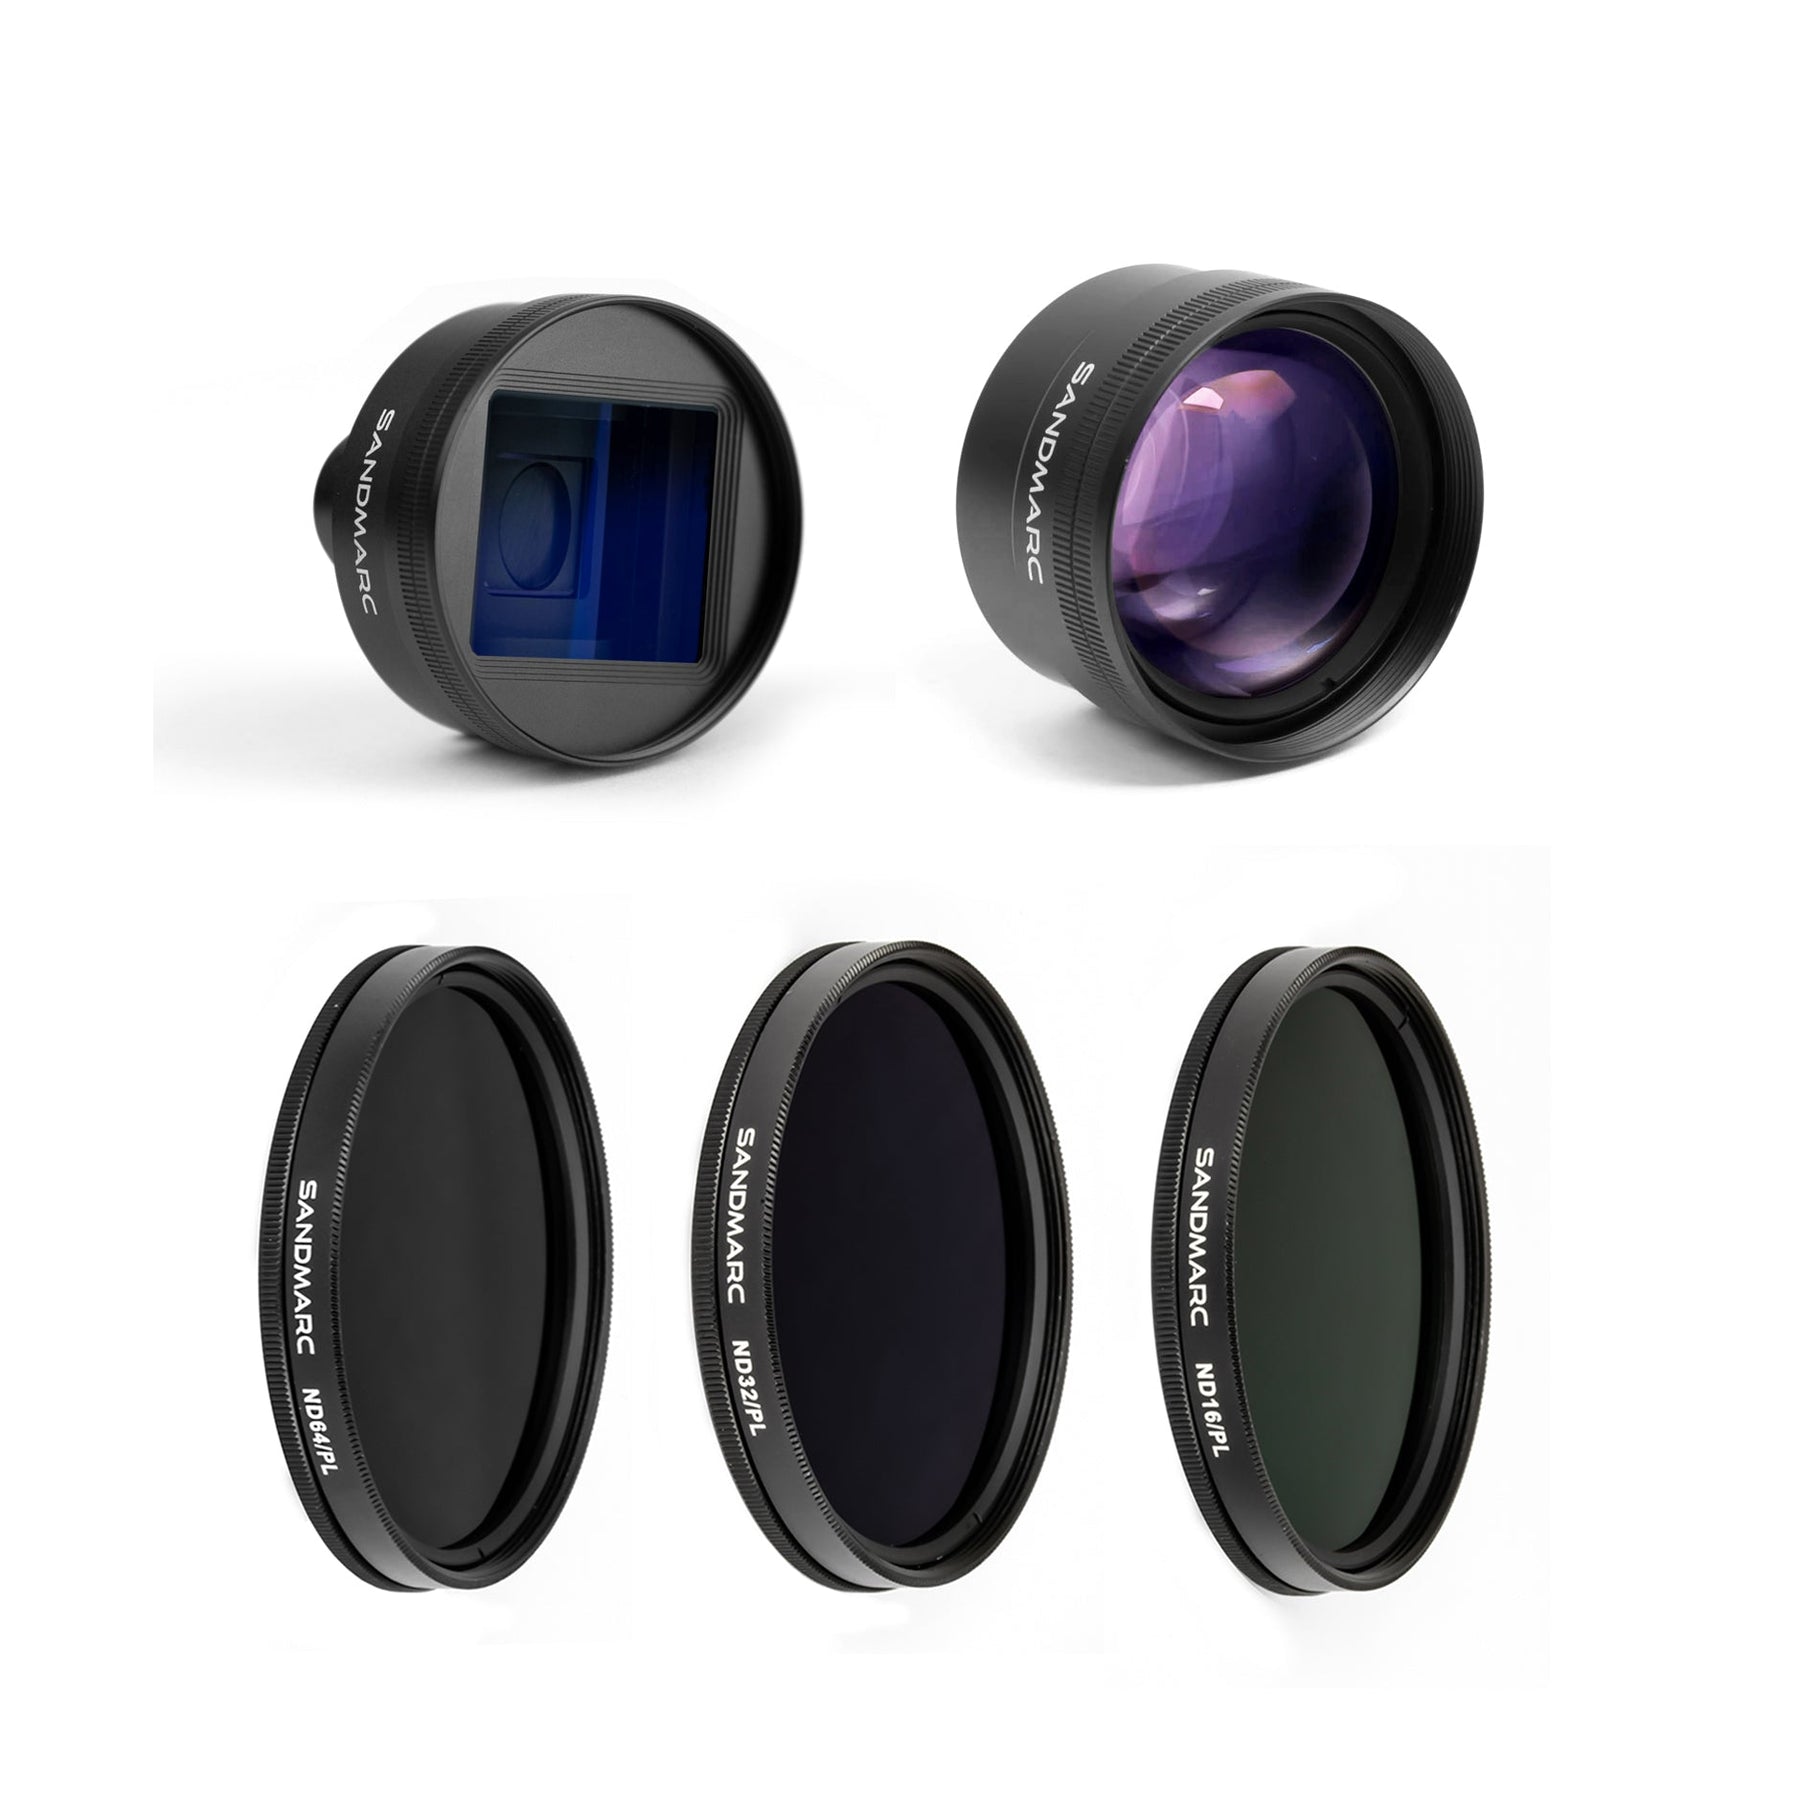 iPhone 14 Pro Lens Kit for Video - Film Edition - SANDMARC